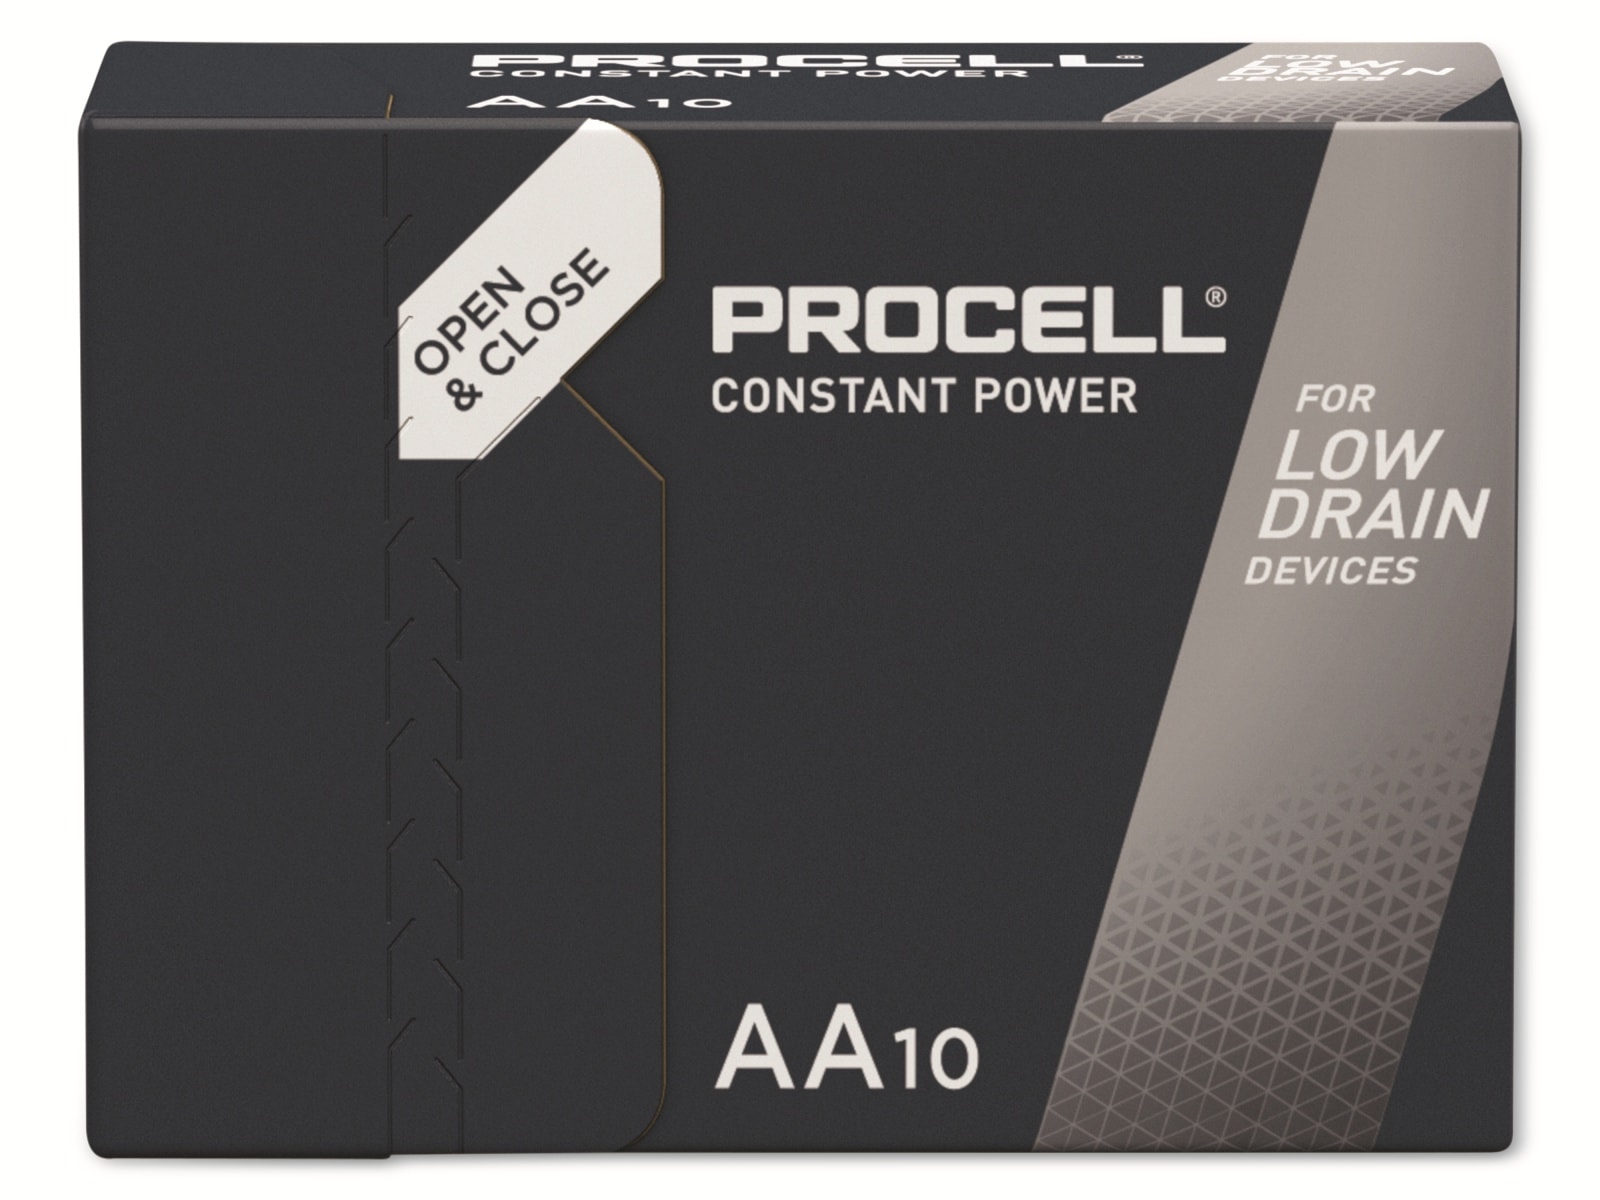 DURACELL Alkaline-Mignon-Batterie LR06, 1.5V, Procell Constant, 10 Stück